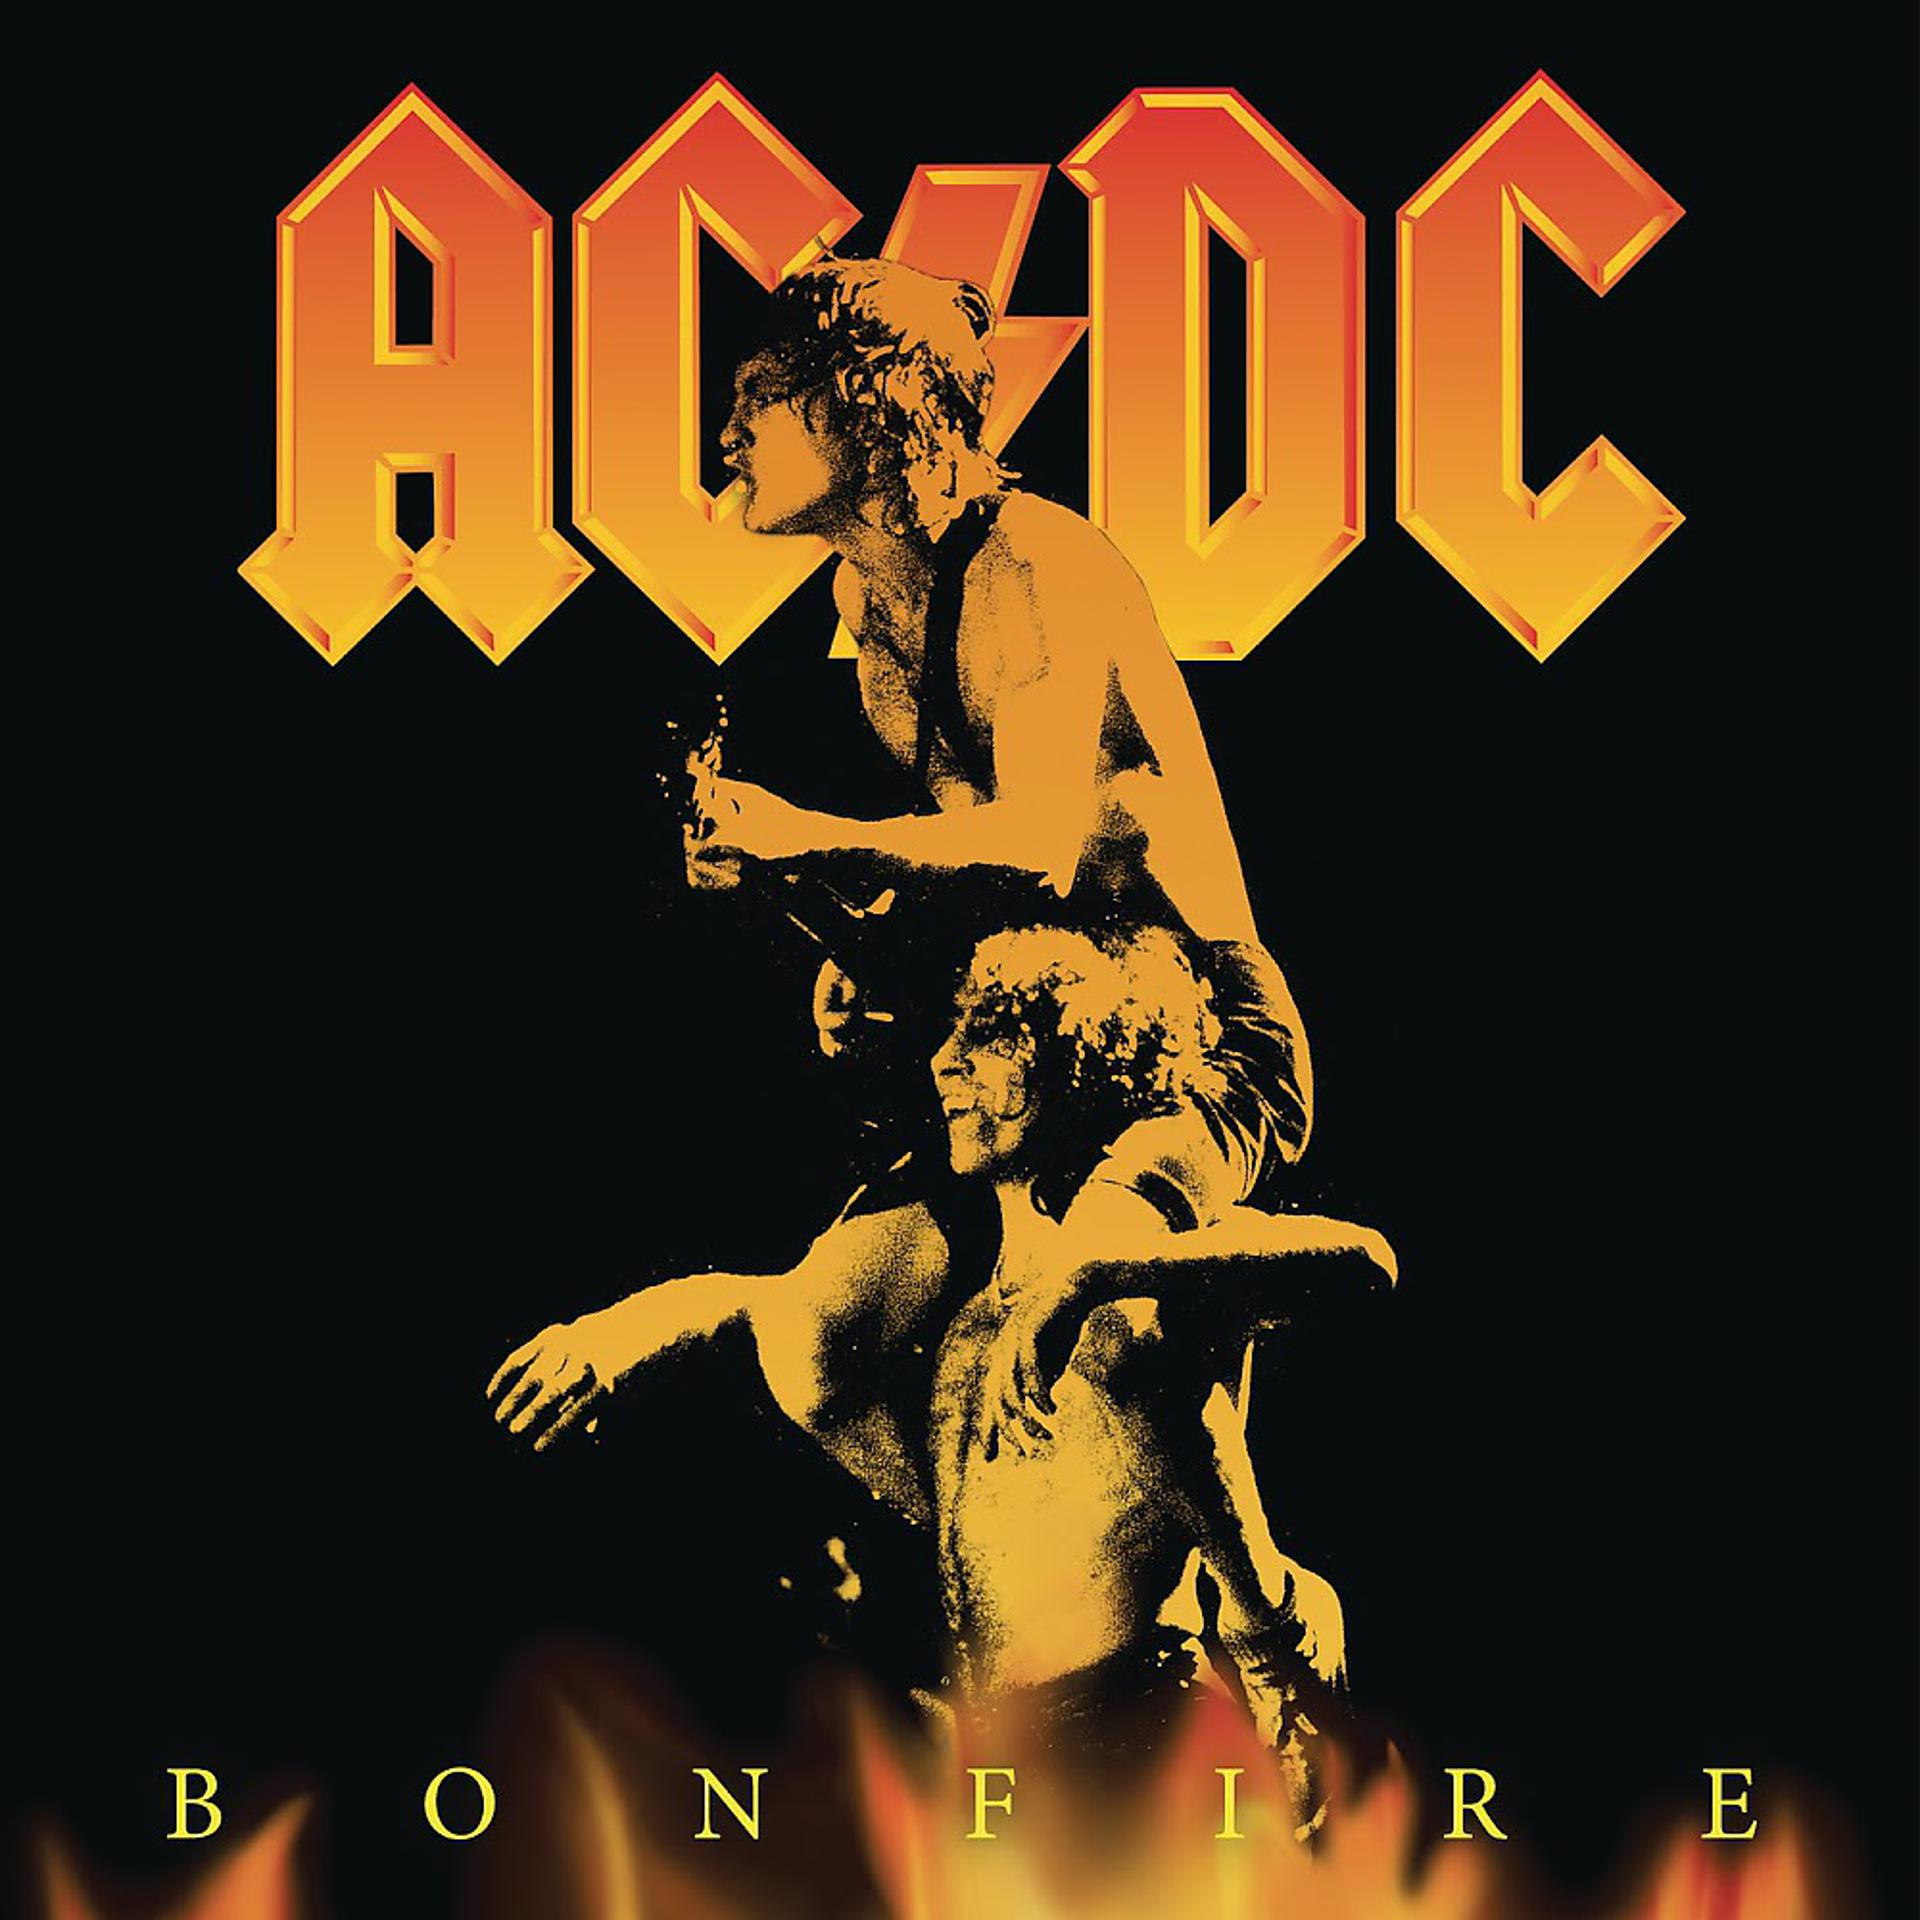 Dc volts. AC DC обложки альбомов. AC DC Bonfire обложка CD. AC/DC "Bonfire Box (5cd)". Bonfire AC/DC обложка.